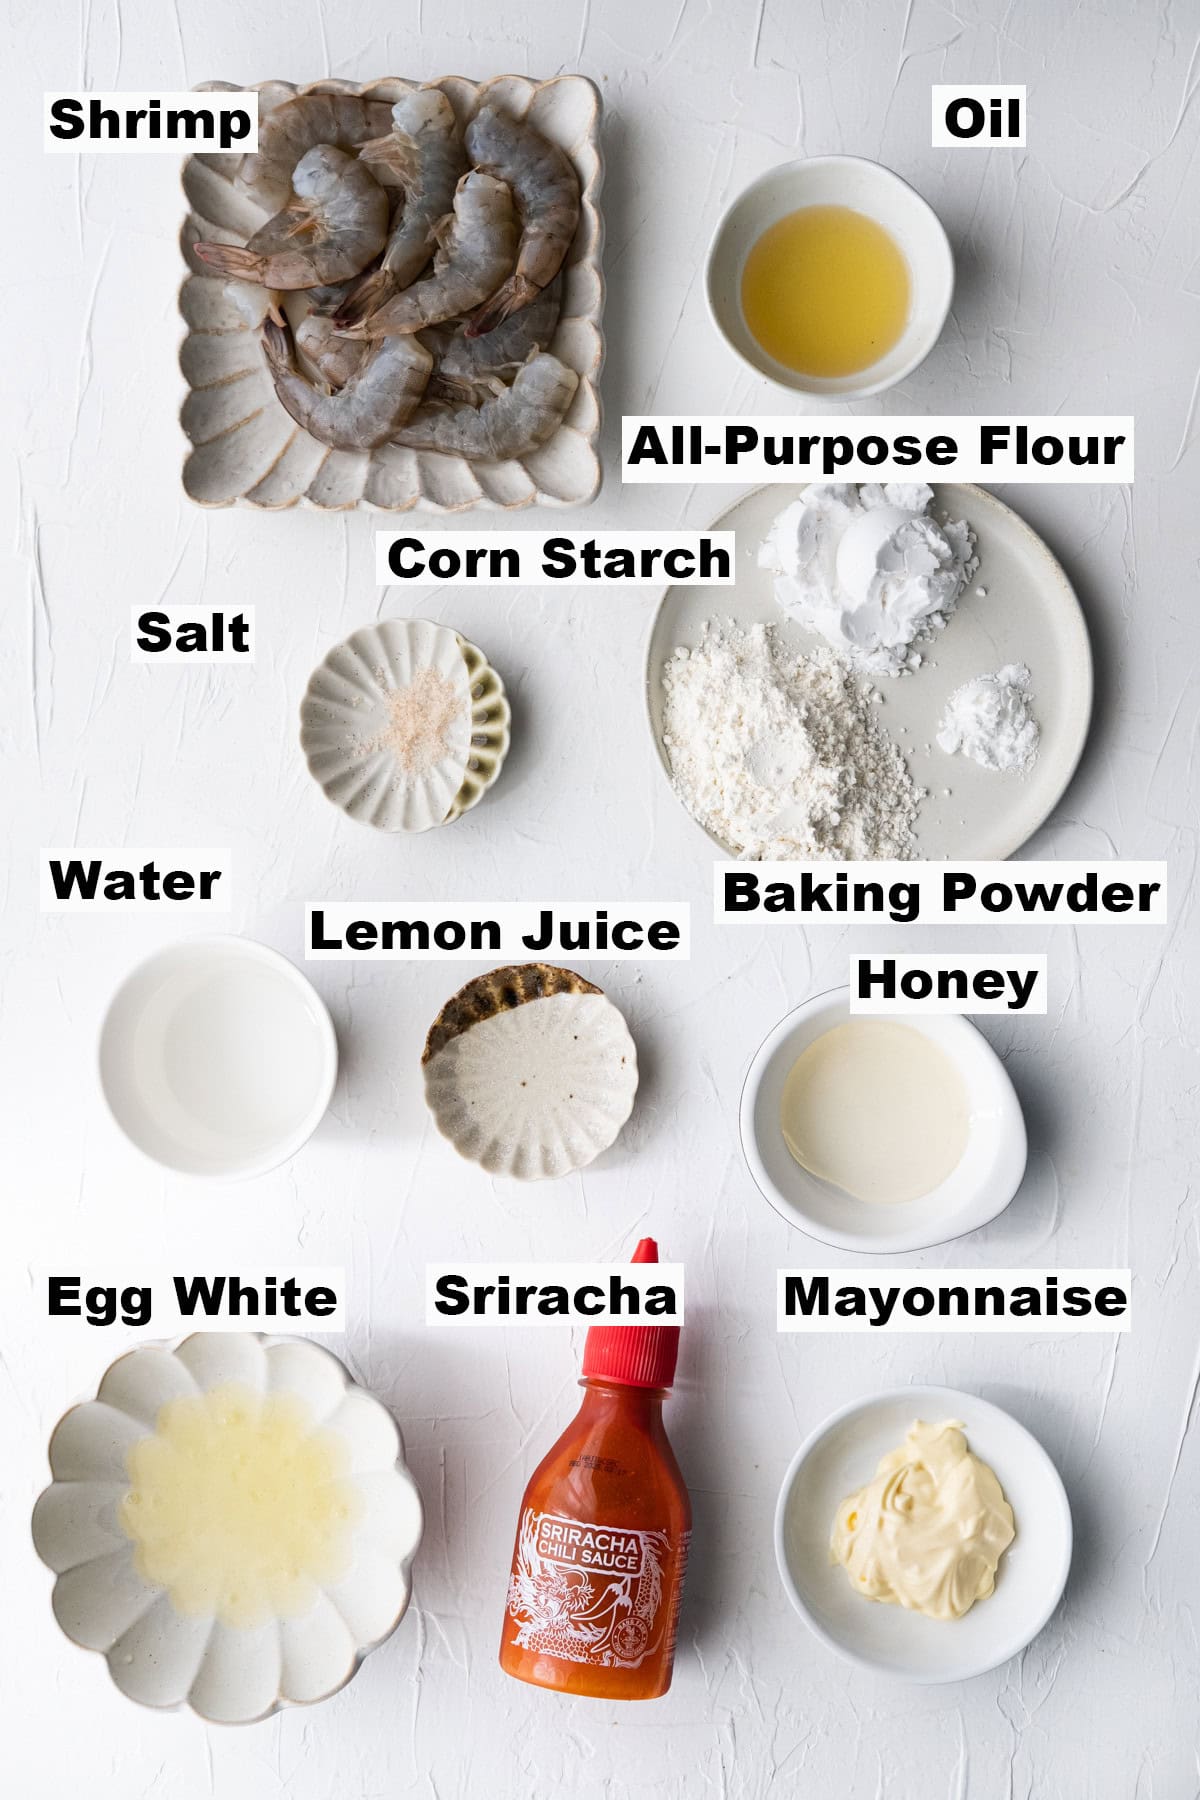 Ingredients used for dynamite shrimp.